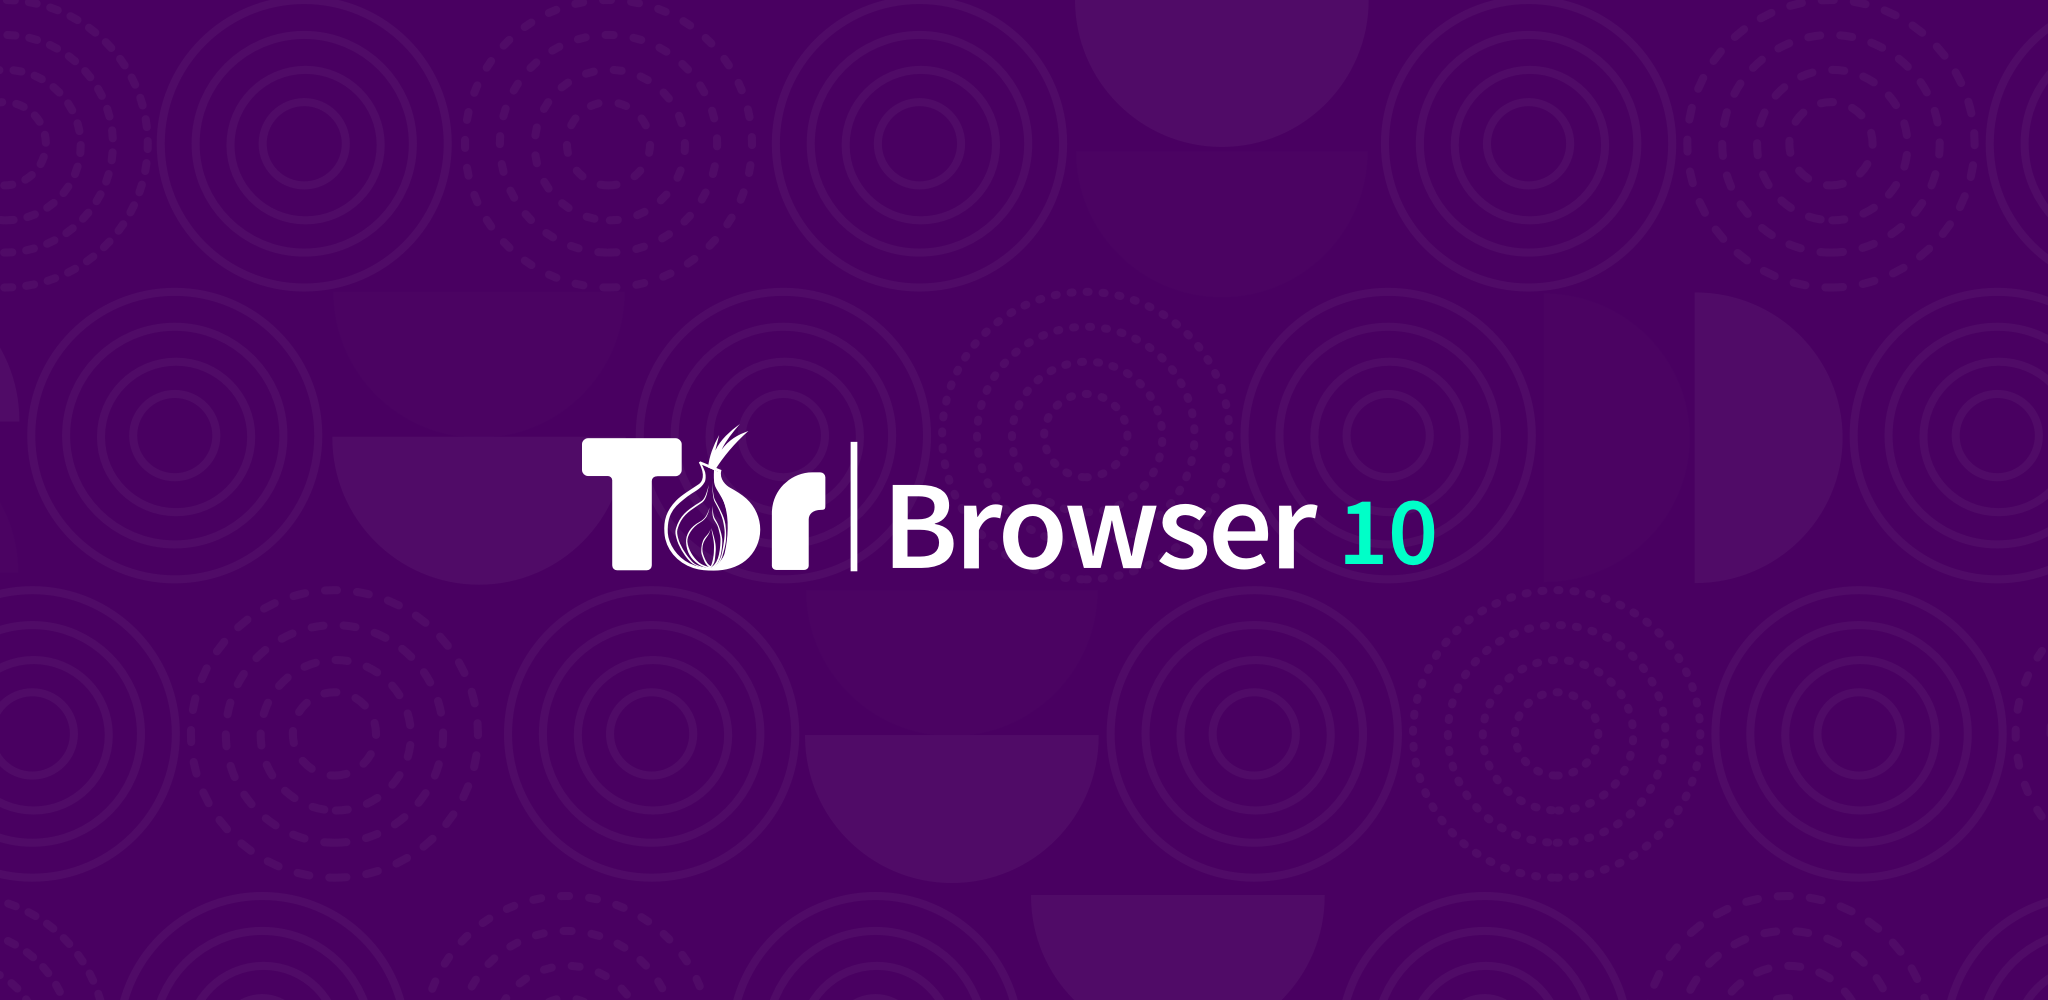 Tor browser tor2web megaruzxpnew4af почему в тор браузере не работает flash mega2web